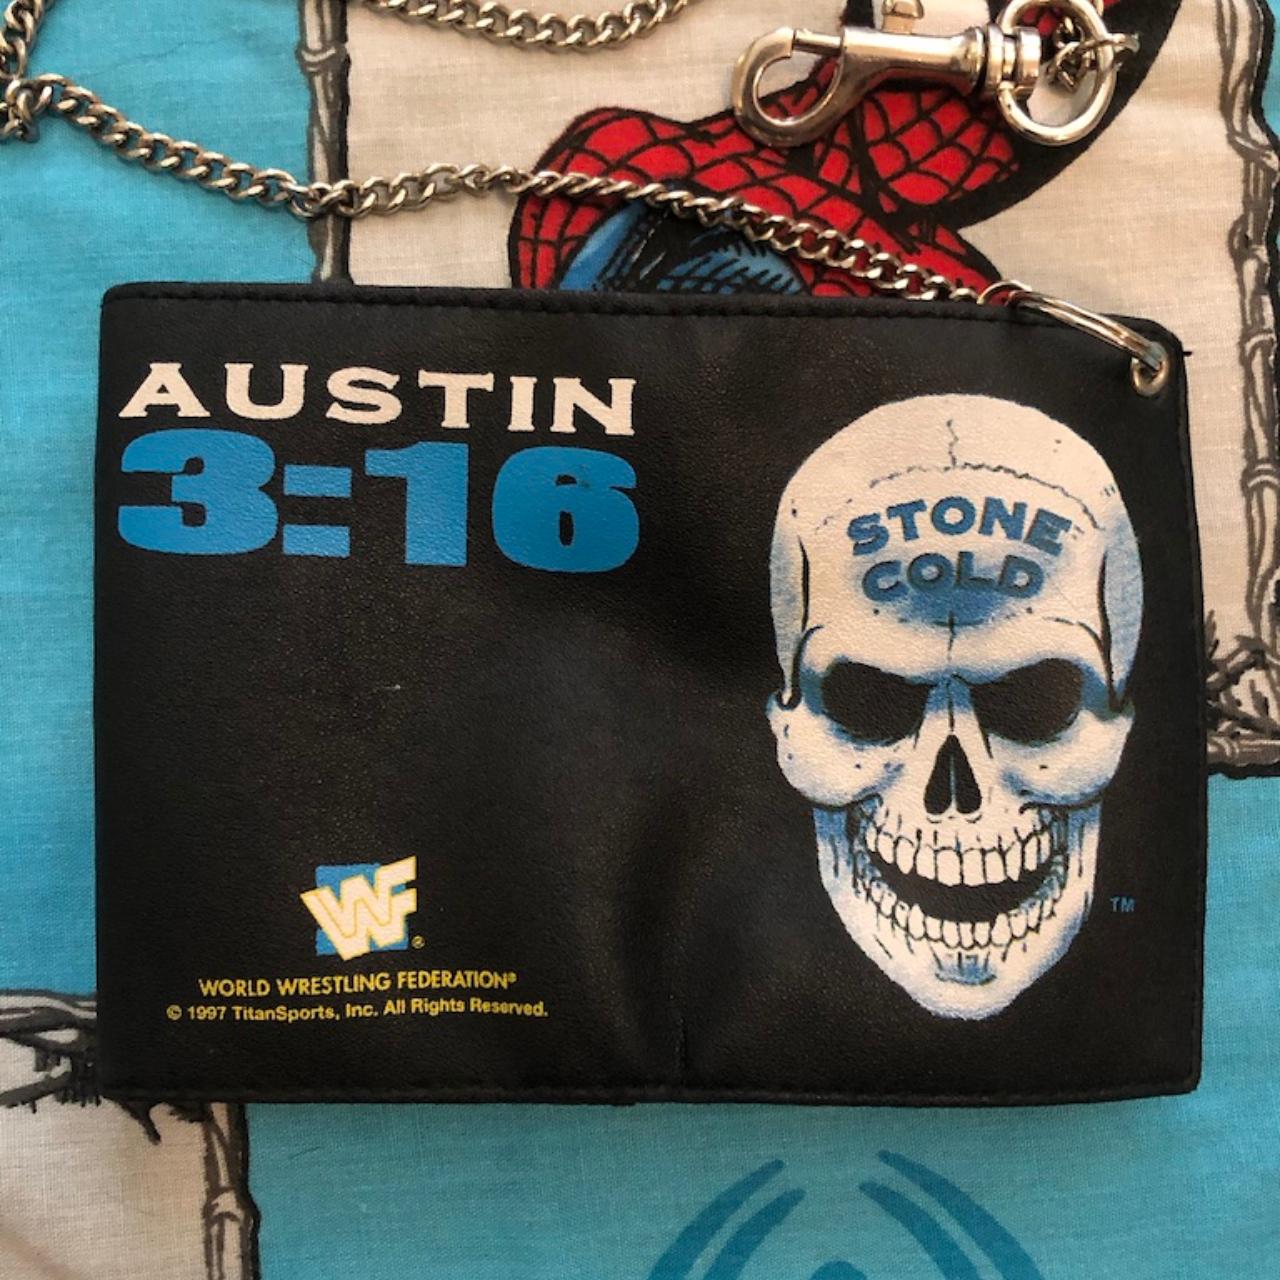 WWE Stone Cold Steve Austin 3:16 Skull Leather Vest